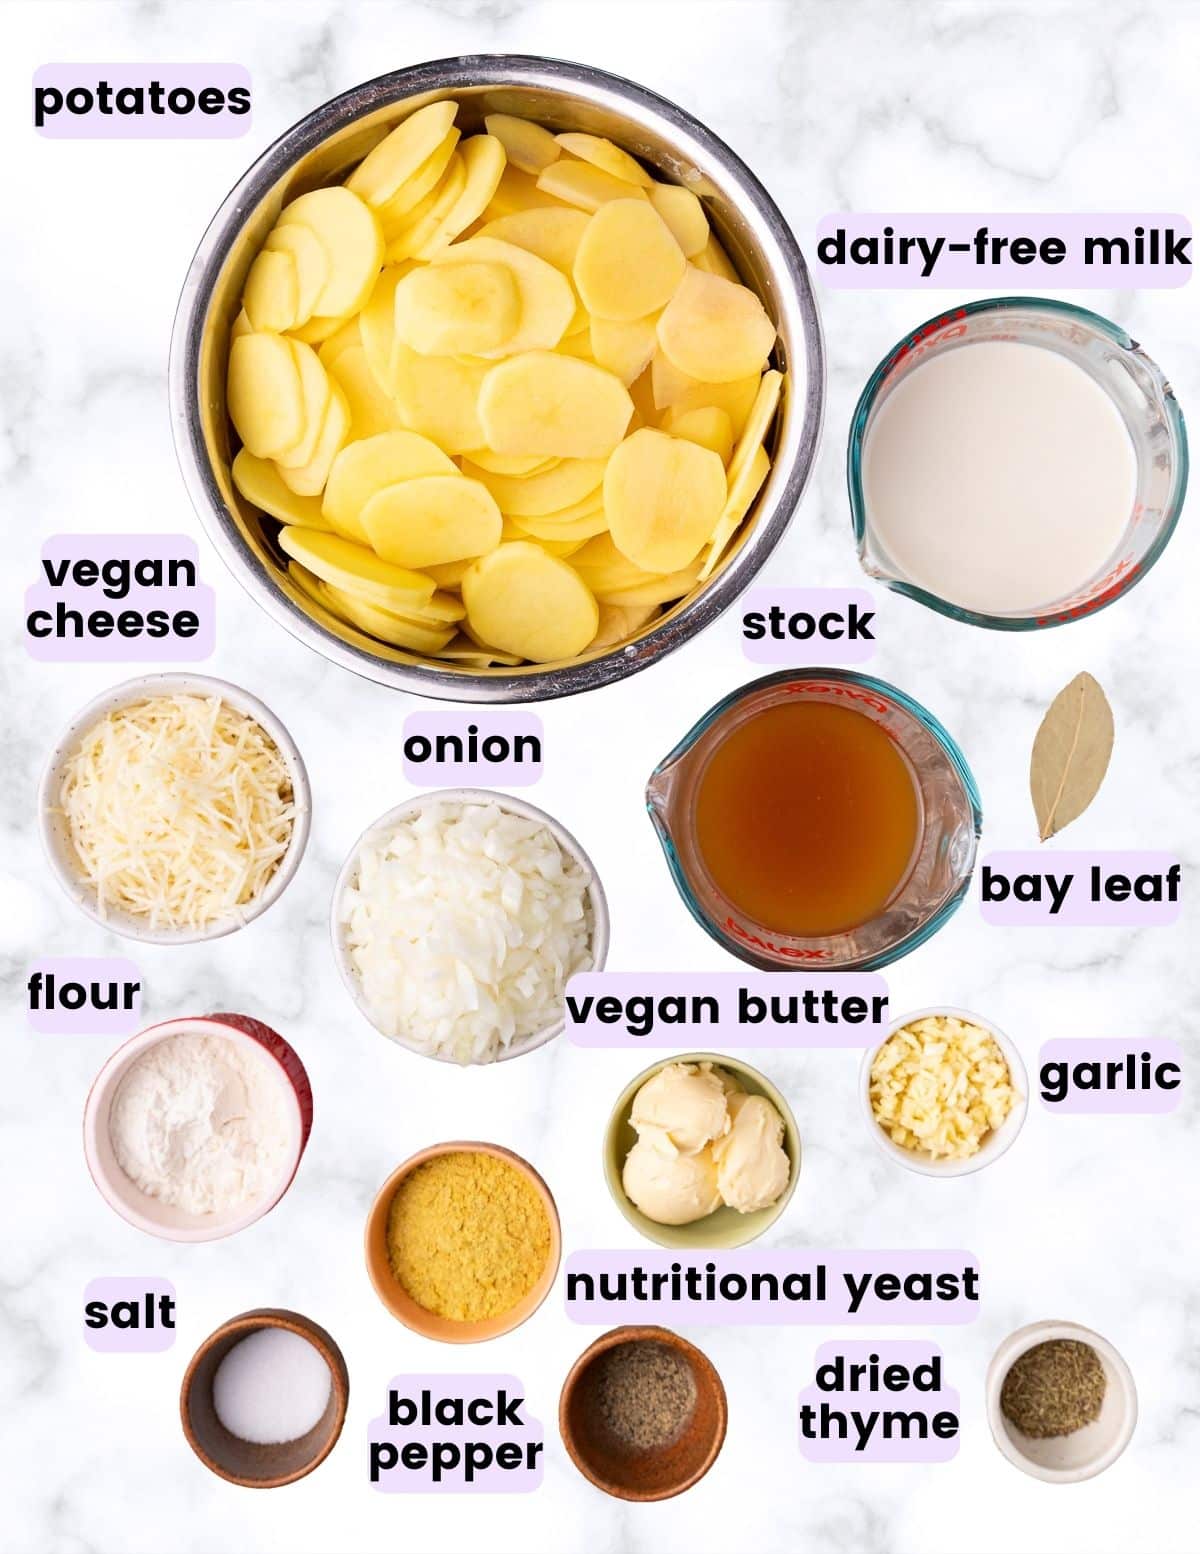 sliced potatoes, dairy-free milk, stock, vegan cheese, onion, flour, bay leaf, vegan butter, garlic, nutritional yeast, salt, pepper, thyme